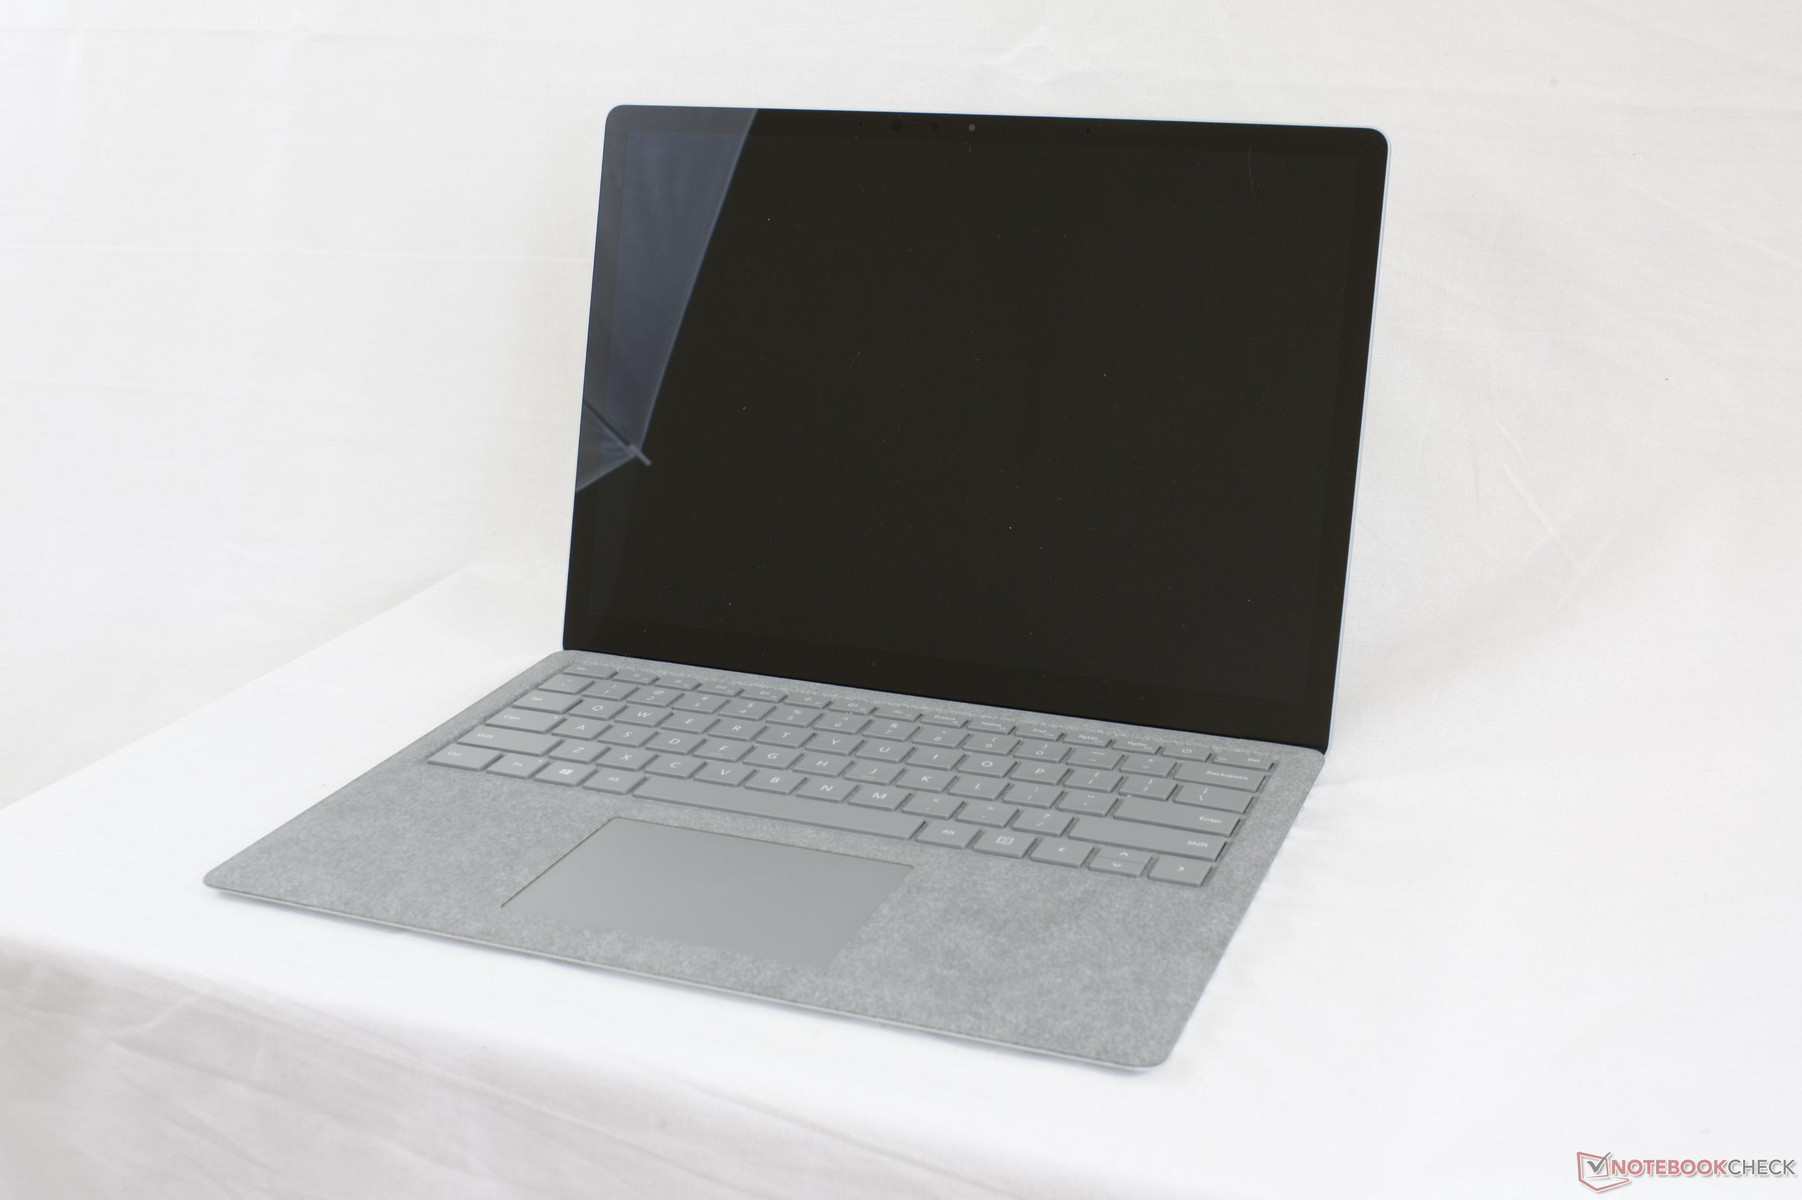 Microsoft Surface I7 7660u Laptop Review Notebookcheck Net Reviews